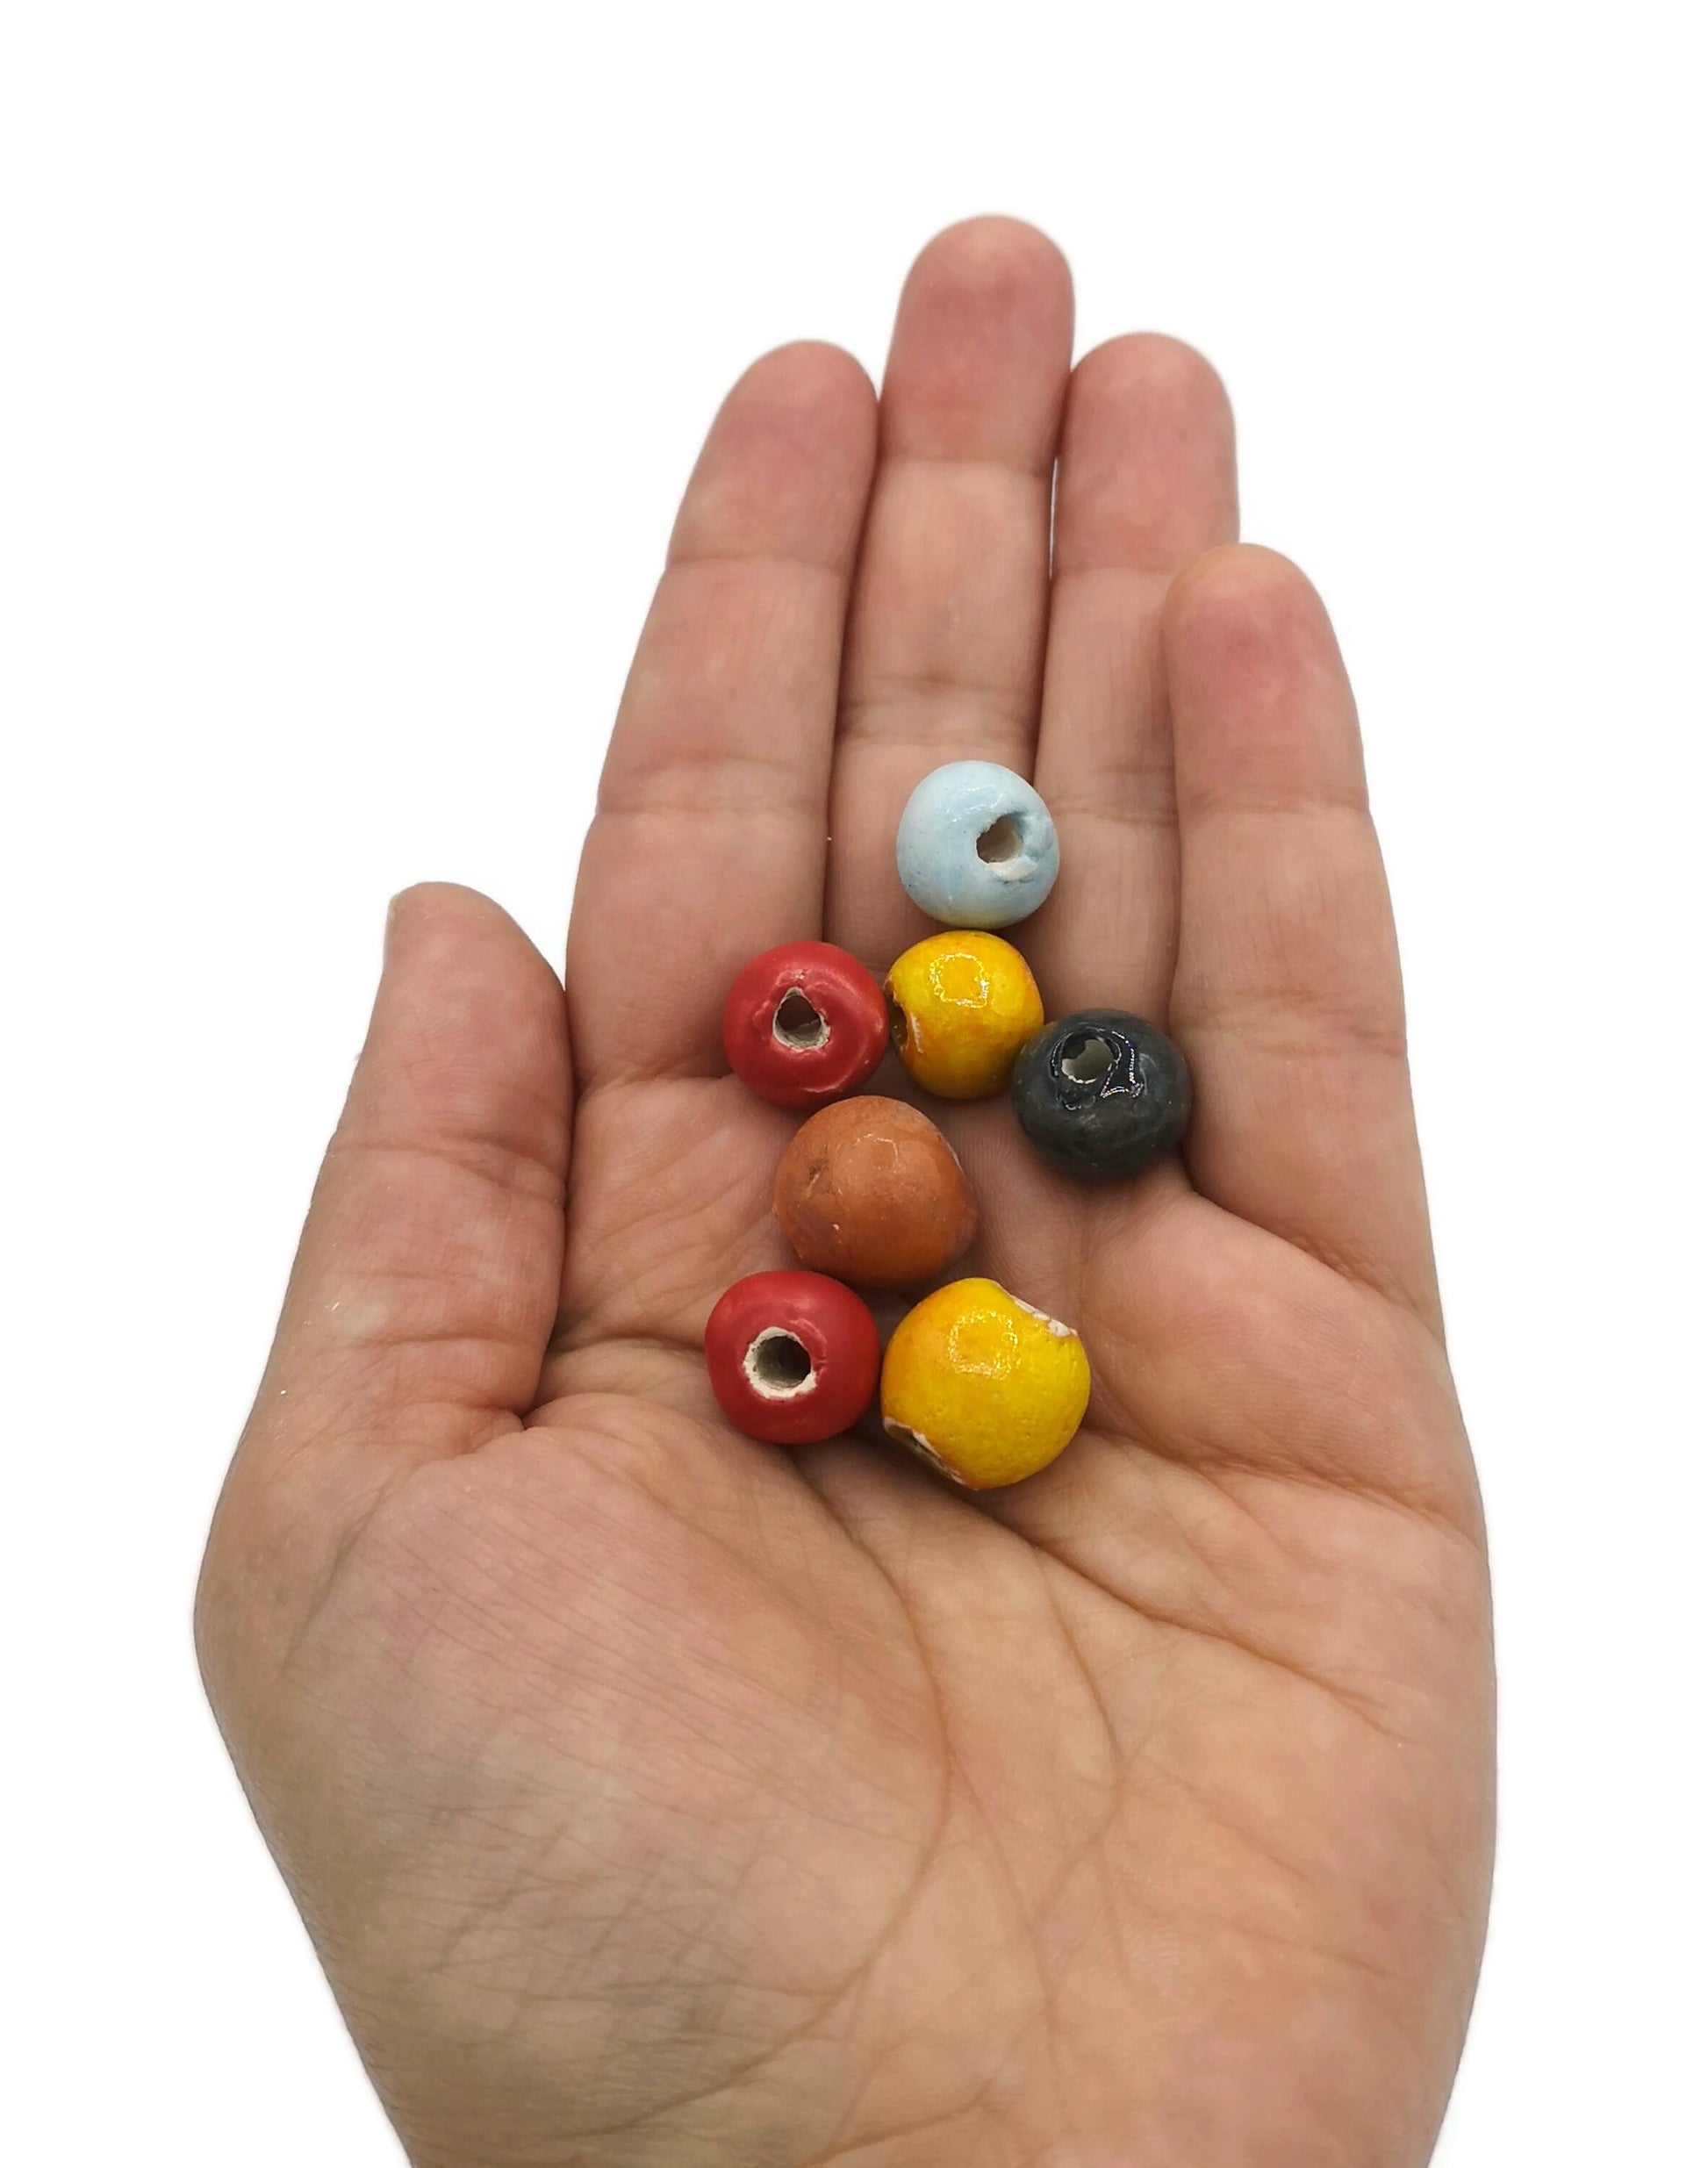 MIXED BEADS, DECORATIVE Beads, Set of 7 Handmade Ceramic Beads For Jewelry Making Or Crafts, Unique Macrame Clay Round Bubblegum Beads - Ceramica Ana Rafael